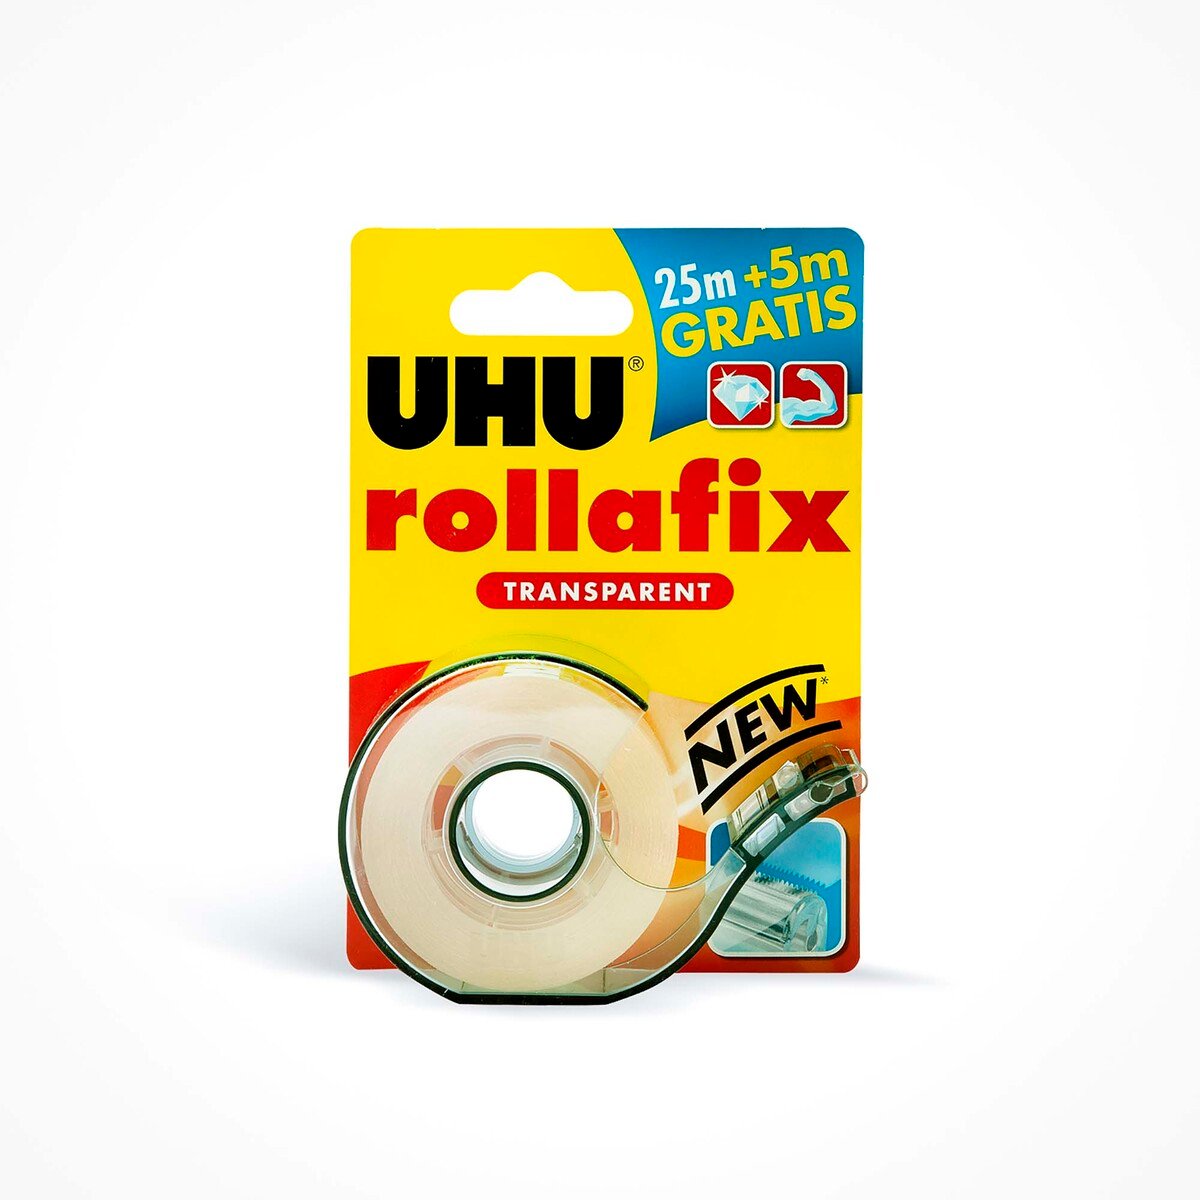 UHU Rolla Fix Transparent Tape 25m+5m 36380 Assorted